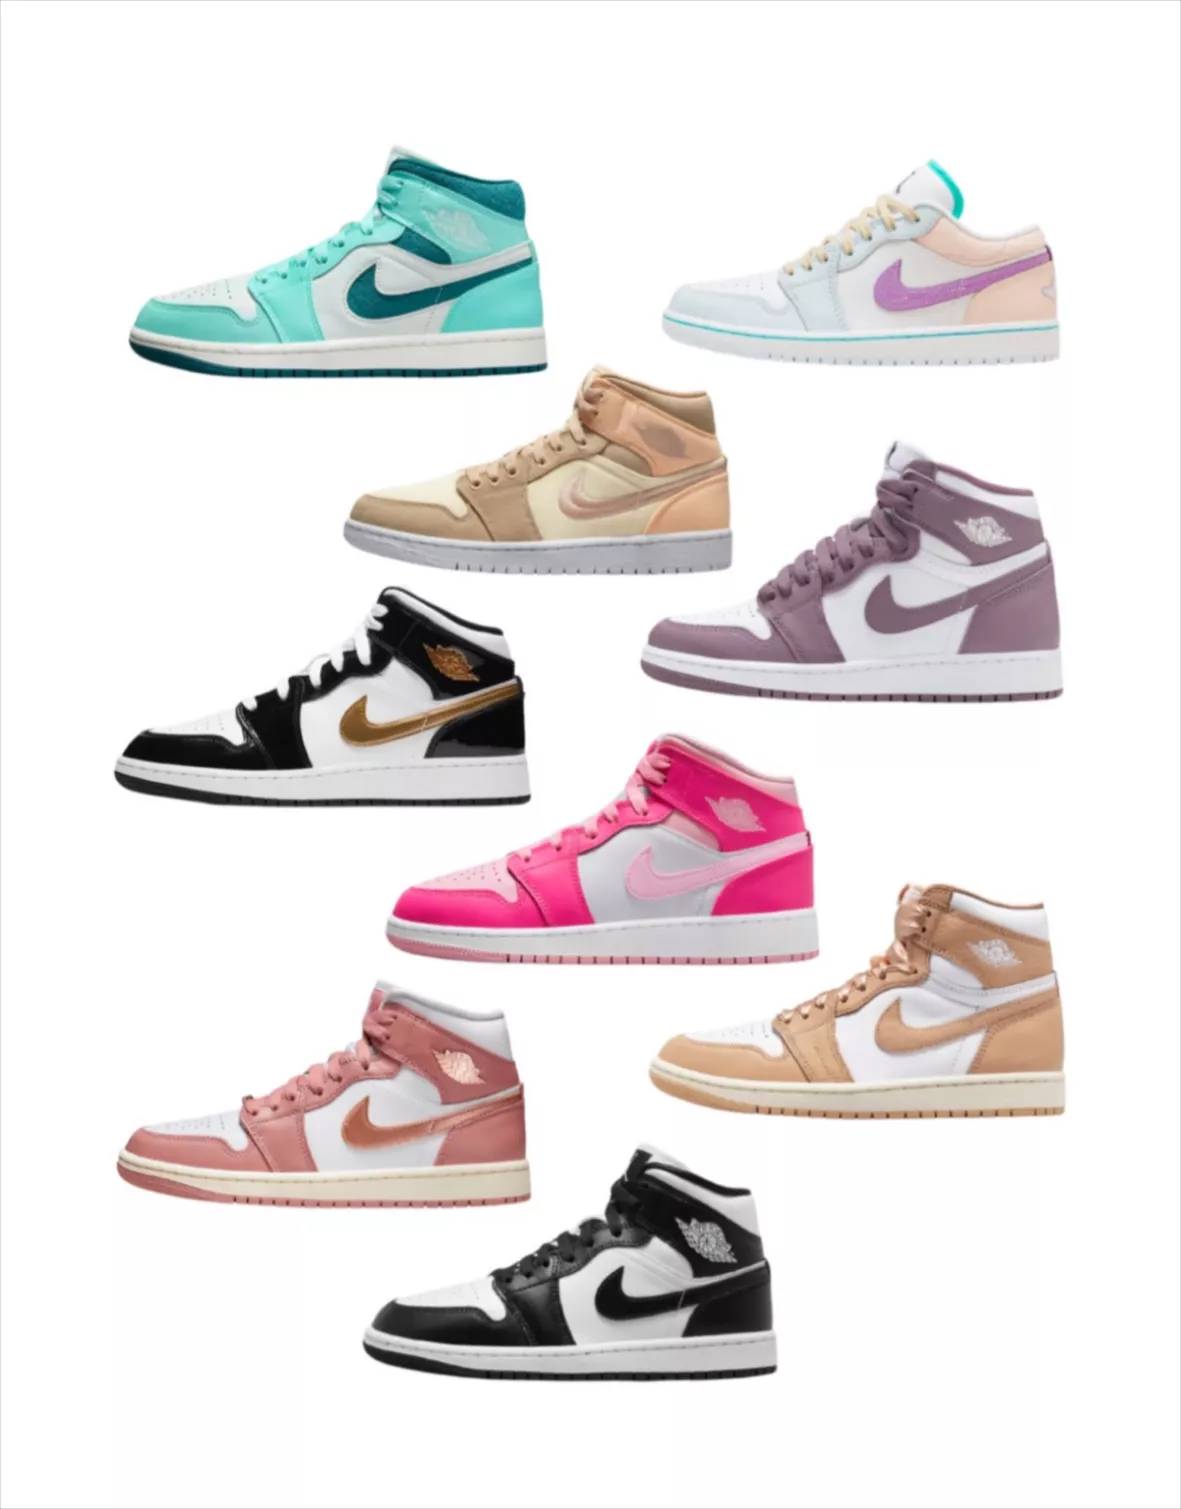 Street Style: Women's Nike Air Jordan 1's